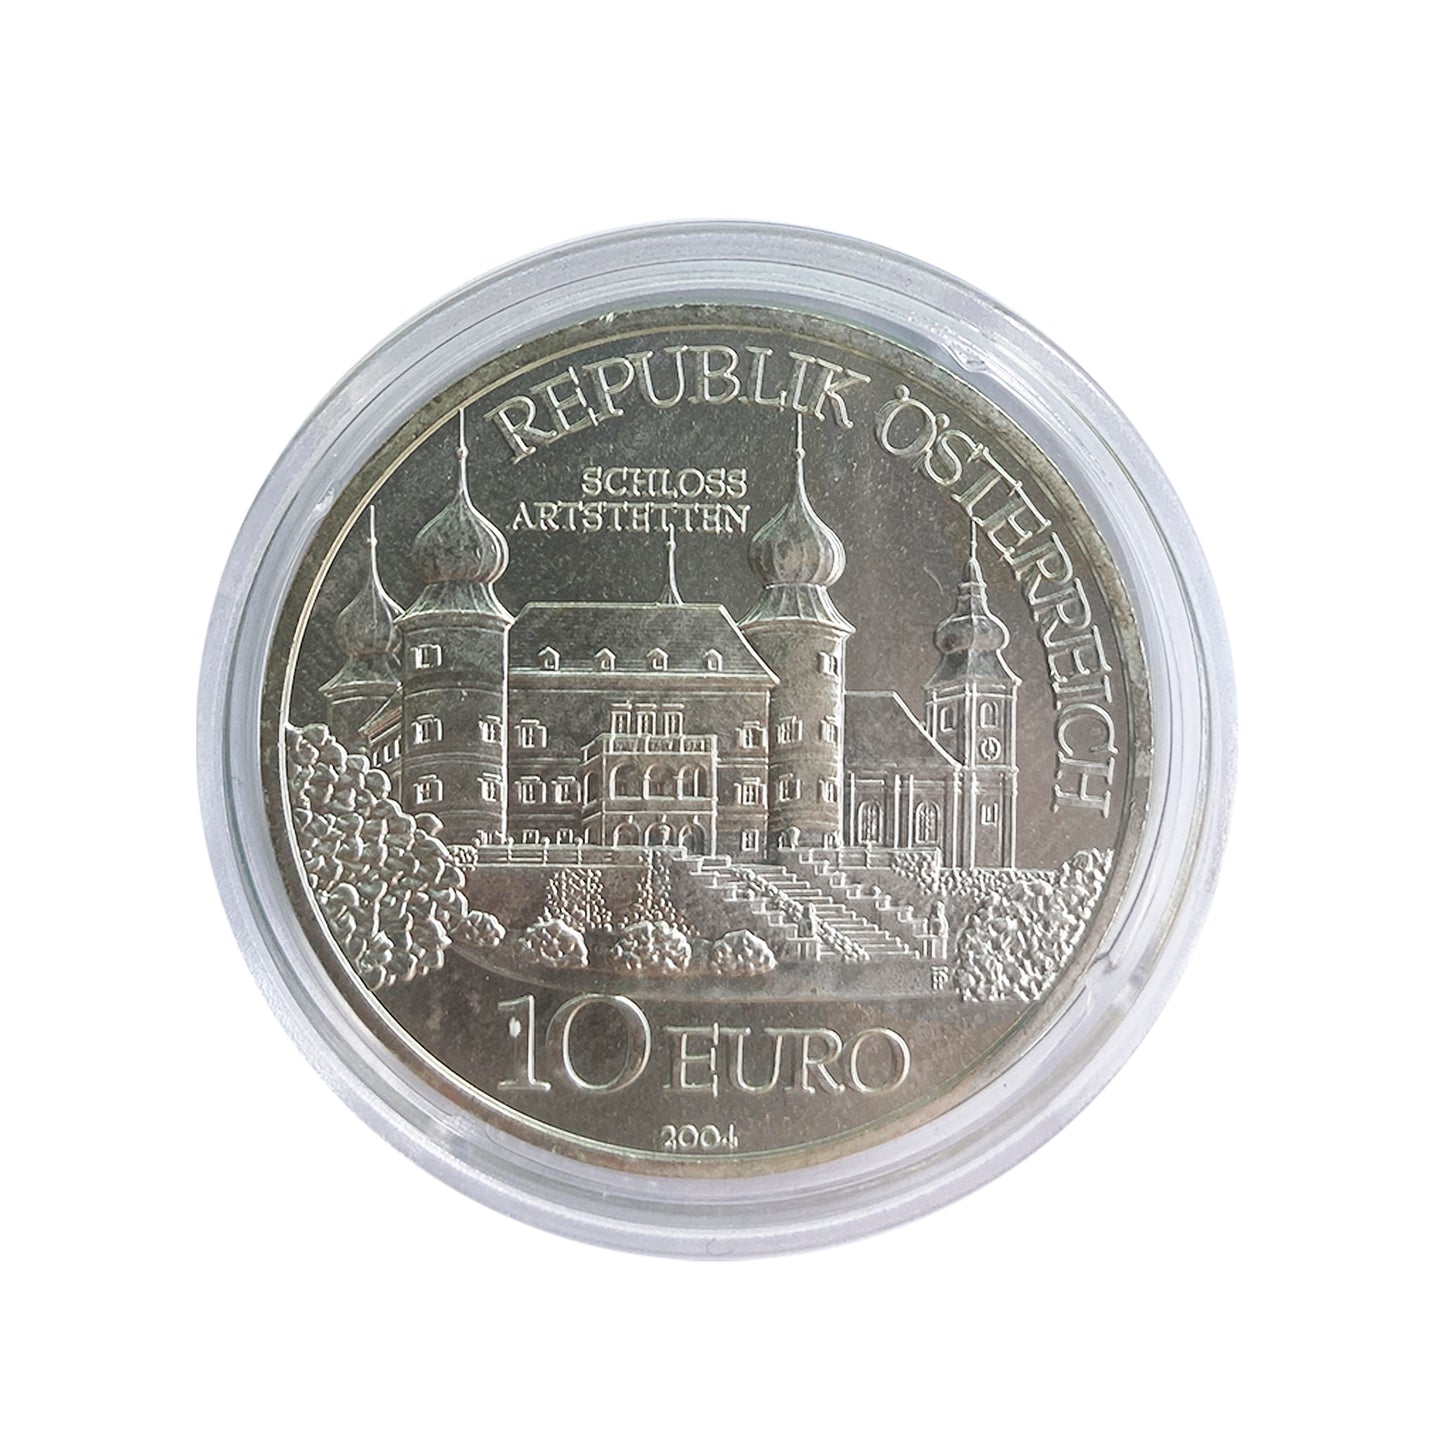 Austria - Moneda 10 euros plata 2004 - Castillo de Artstetten